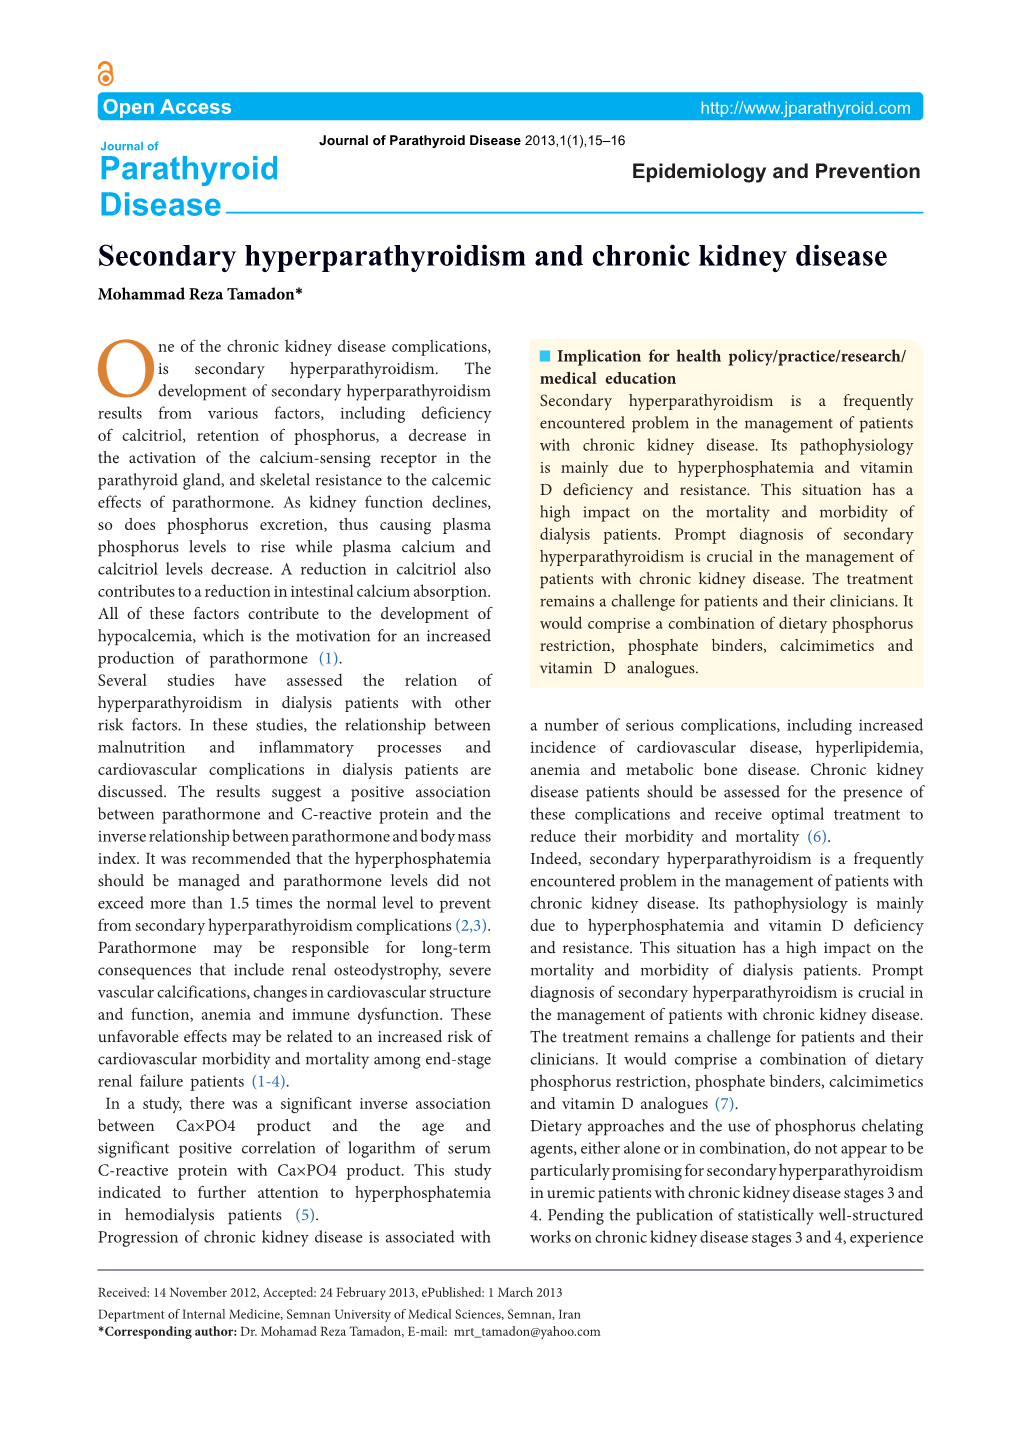 Secondary Hyperparathyroidism and Chronic Kidney Disease Mohammad Reza Tamadon*